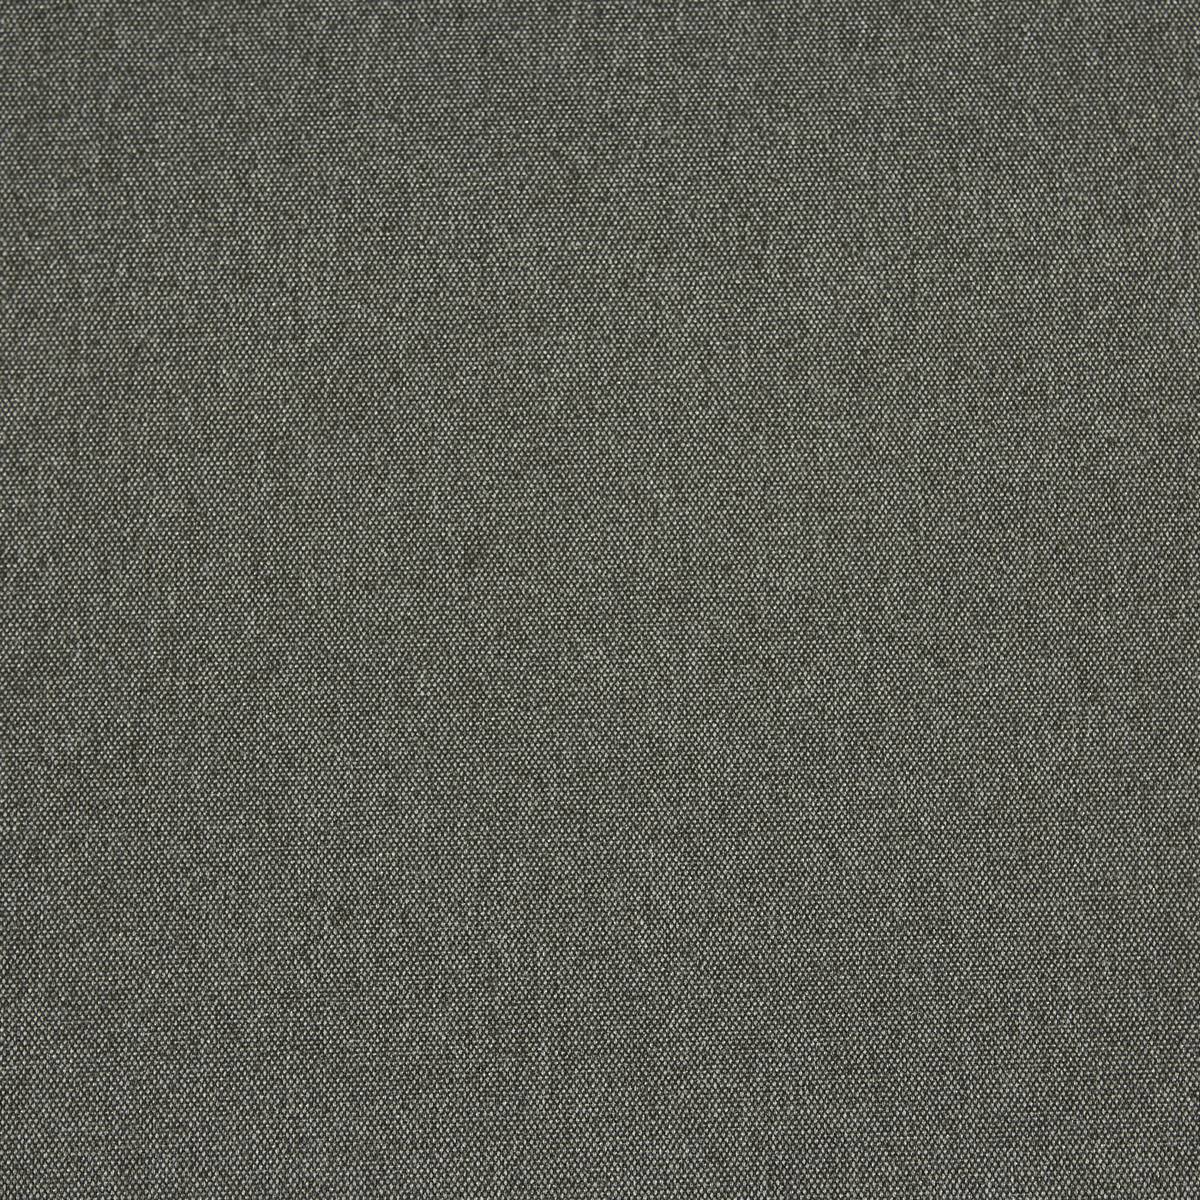 Cavendish Grey Fabric by Prestigious Textiles